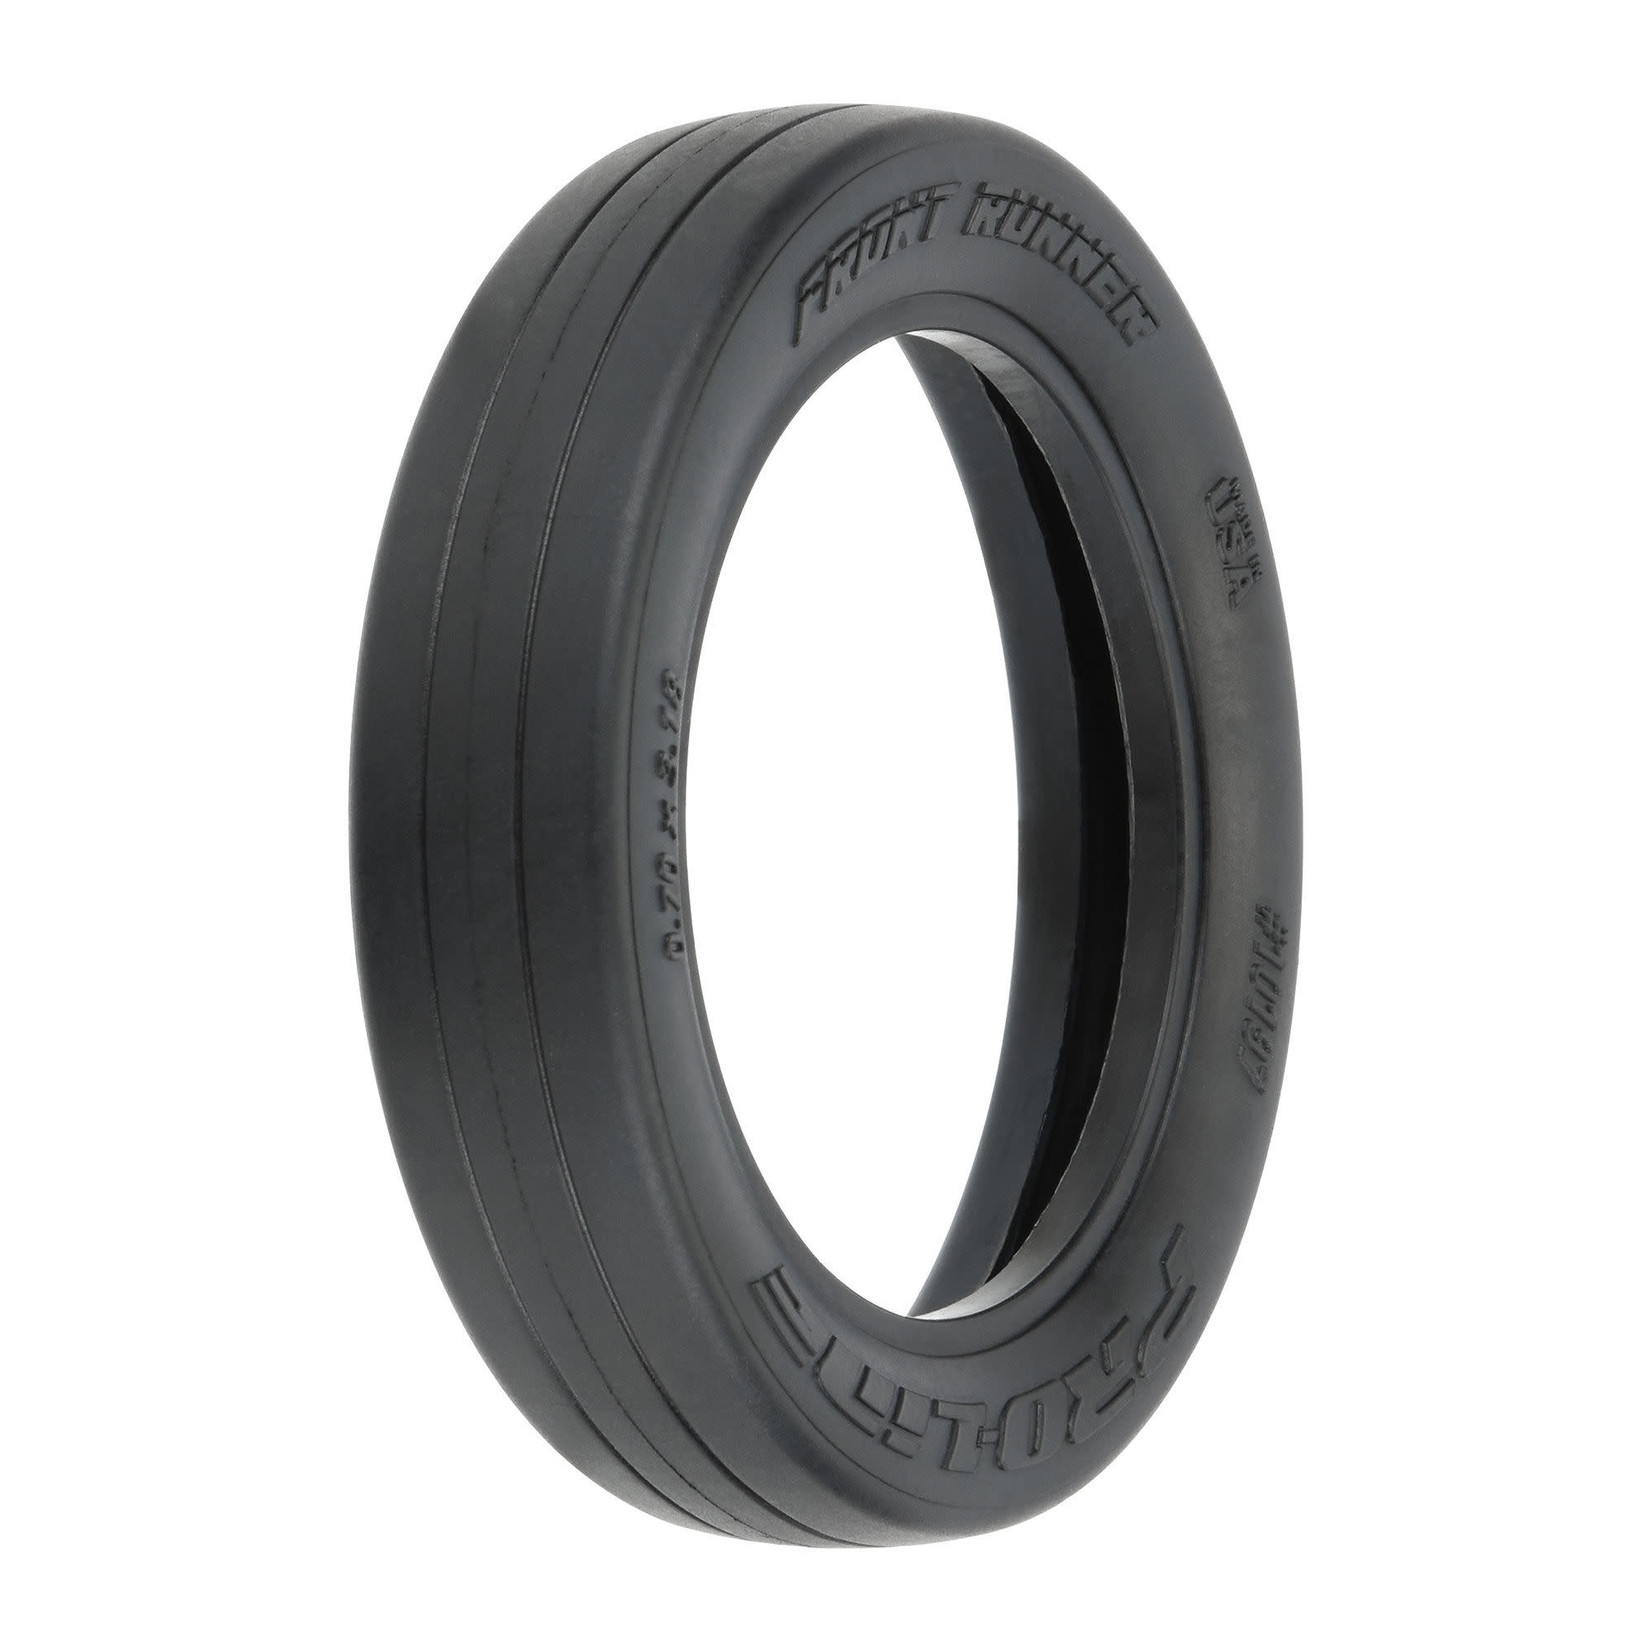 Pro-Line Pro-Line Front Runner 2.2/2.7" Narrow Front Drag Tires (2) (S3) #10197-203